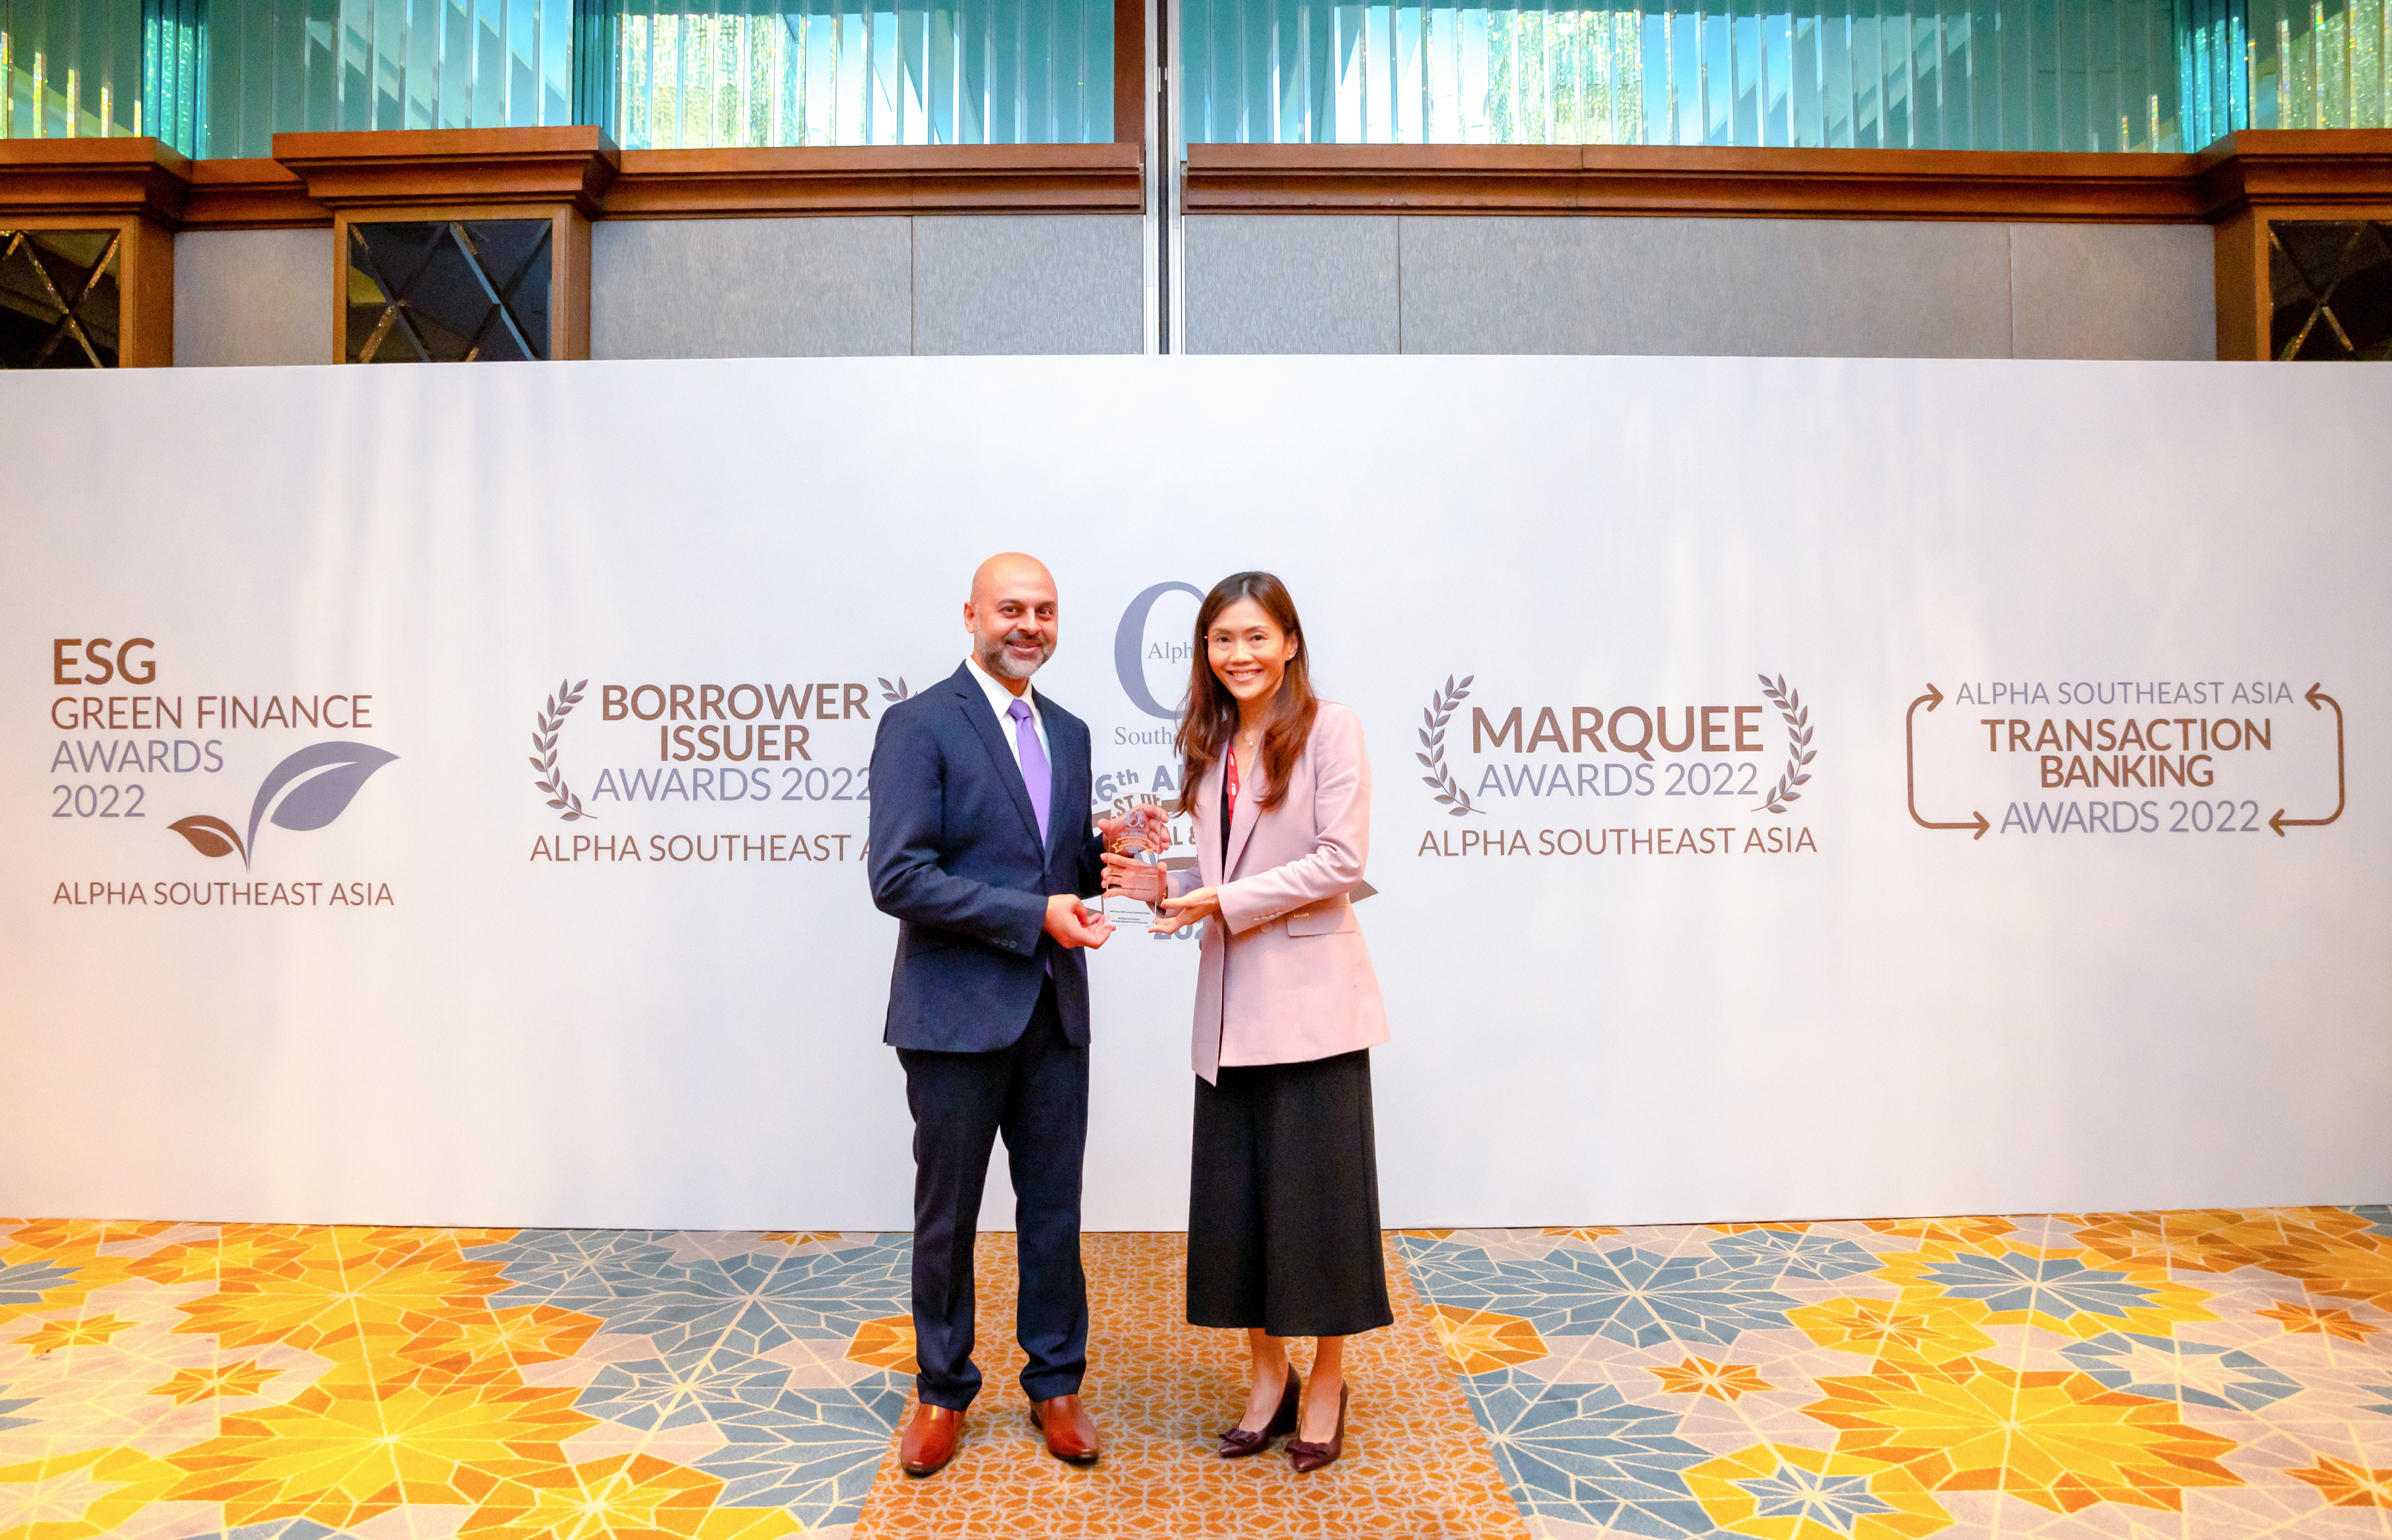 YBhg. Puan Nur Julie Gwee Ariff received the award on behalf of MAIB.